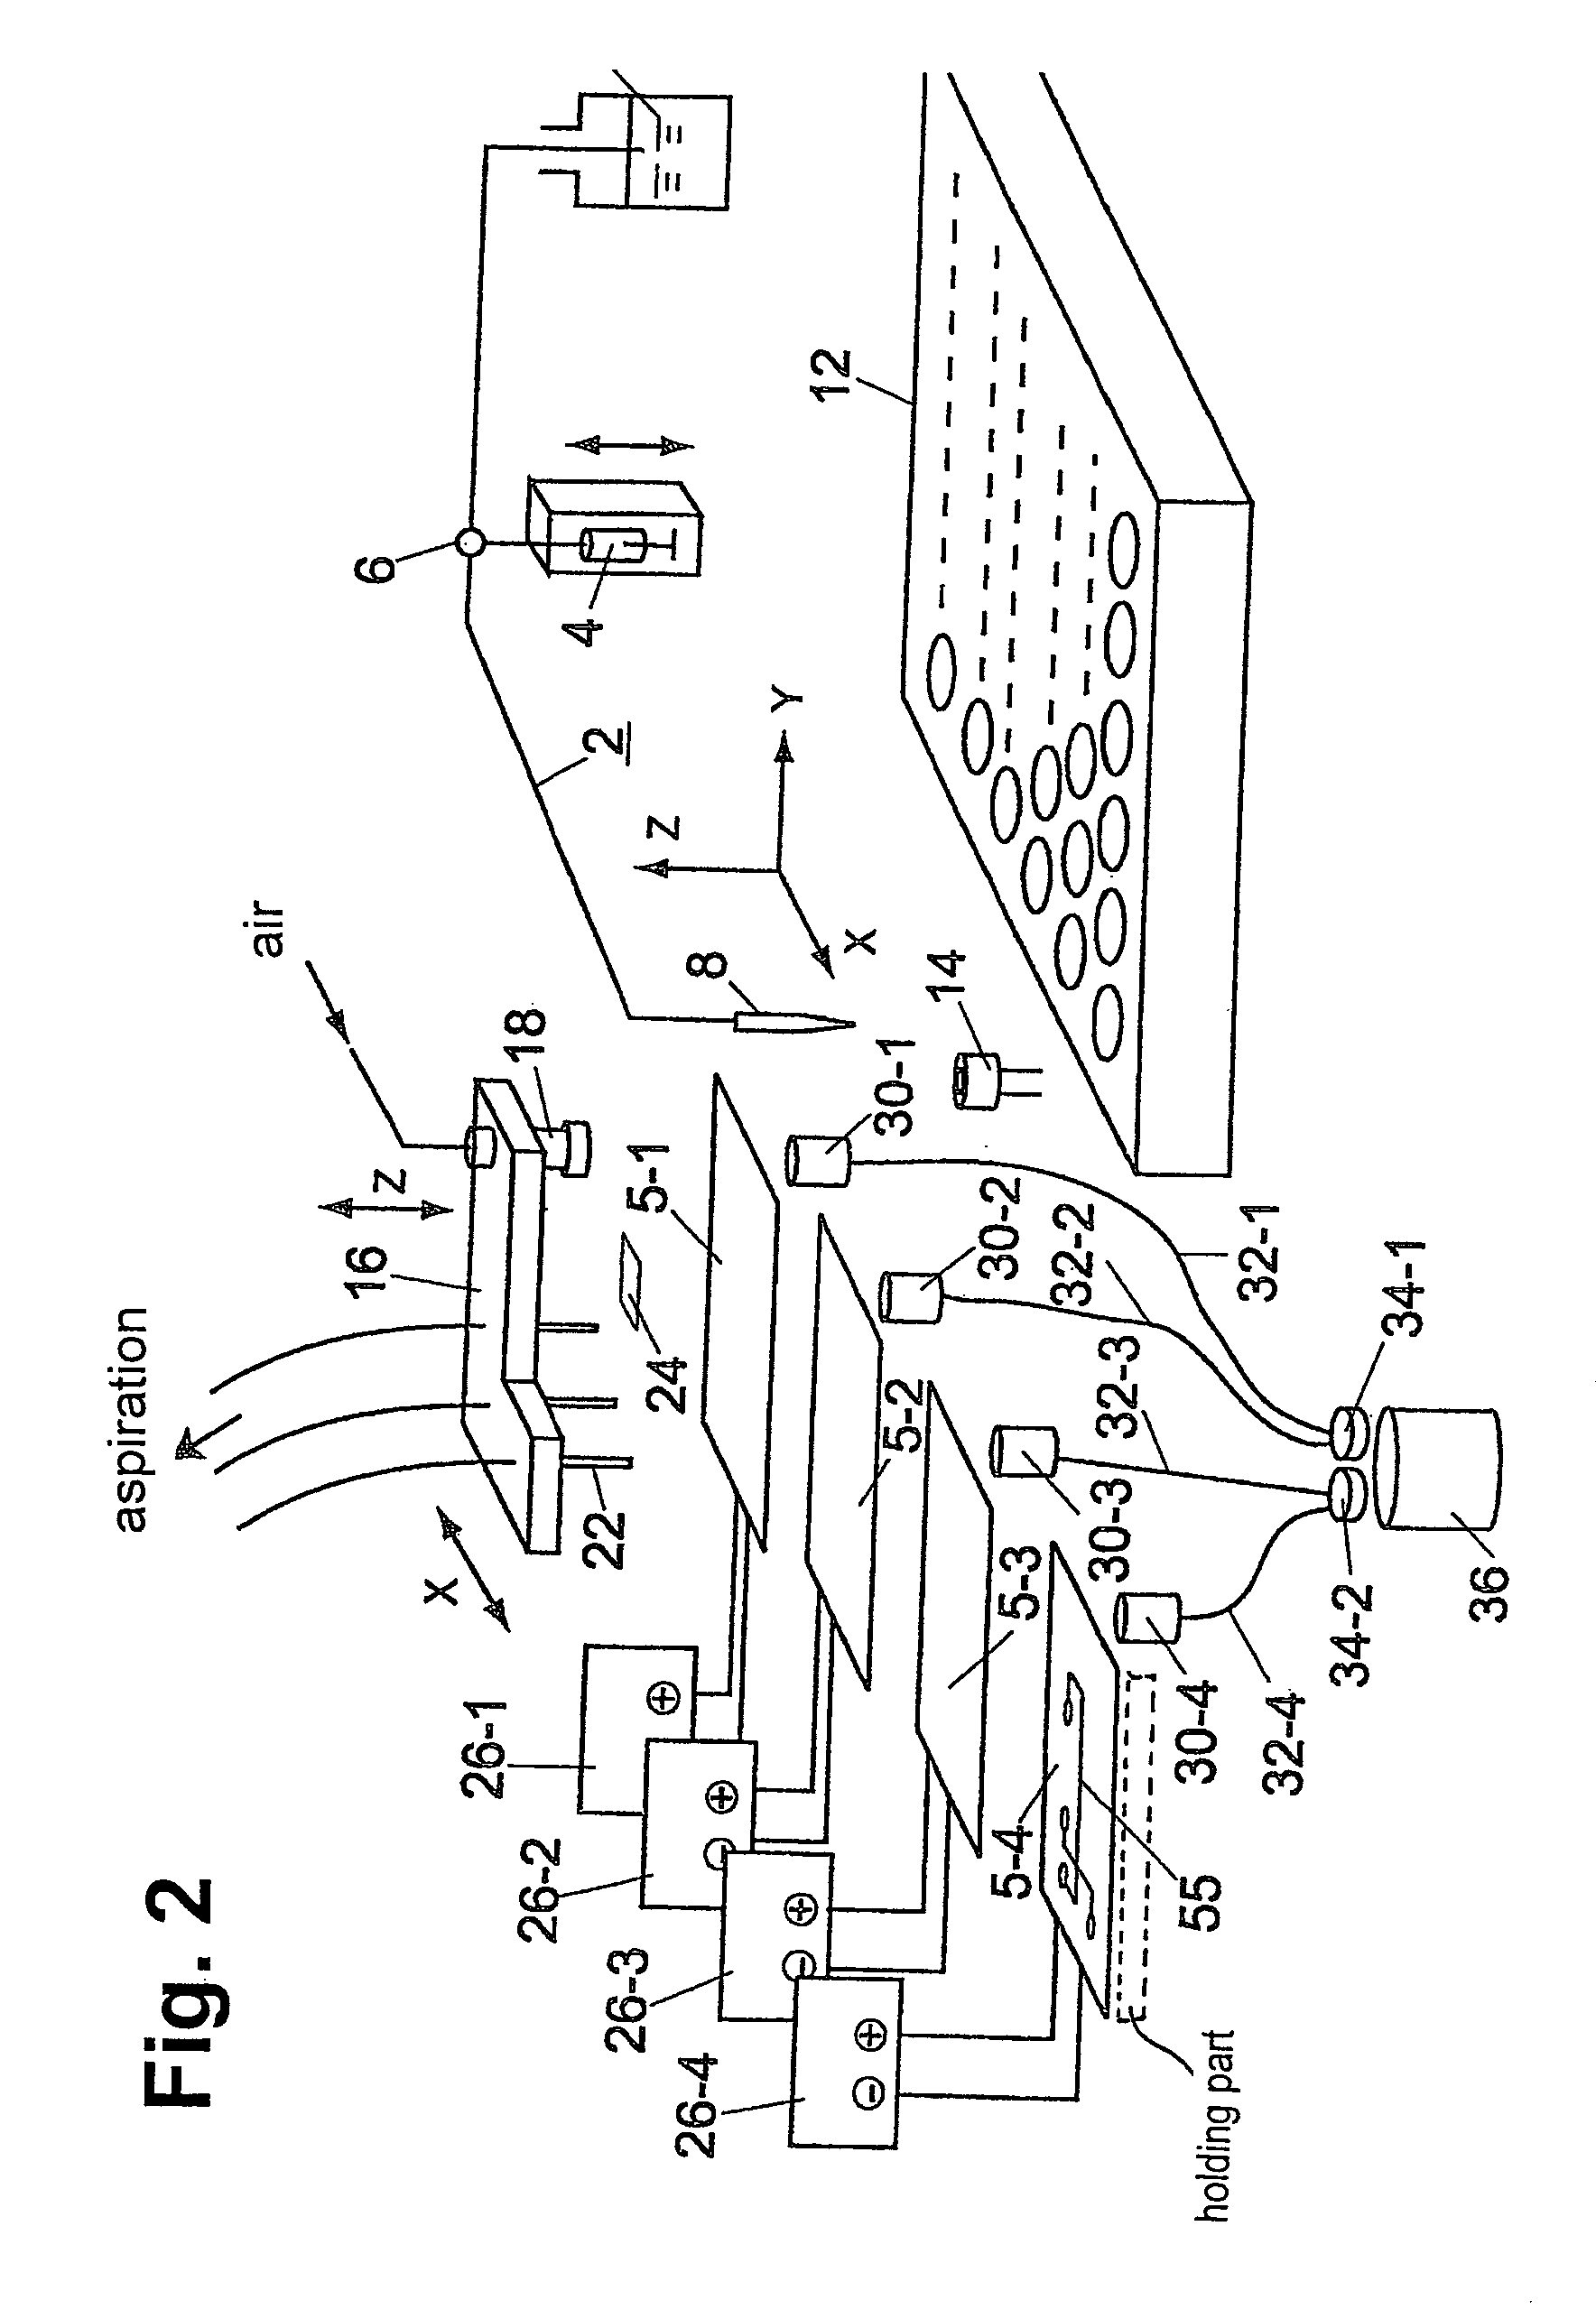 Microchip processing apparatus